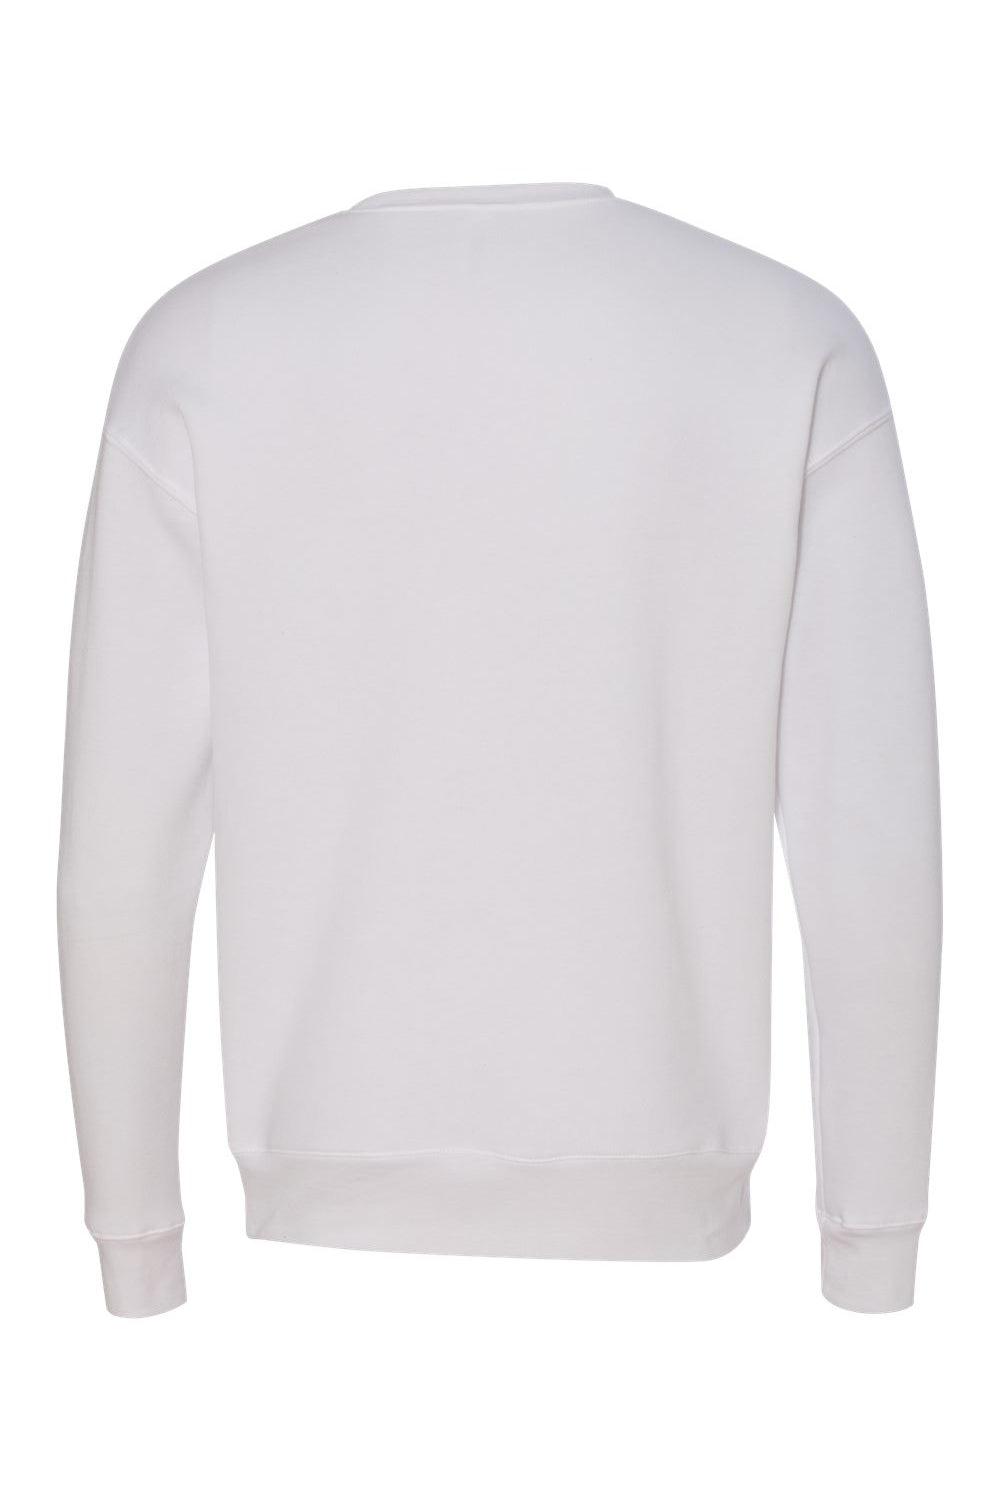 Bella + Canvas BC3945/3945 Mens Fleece Crewneck Sweatshirt White Flat Back